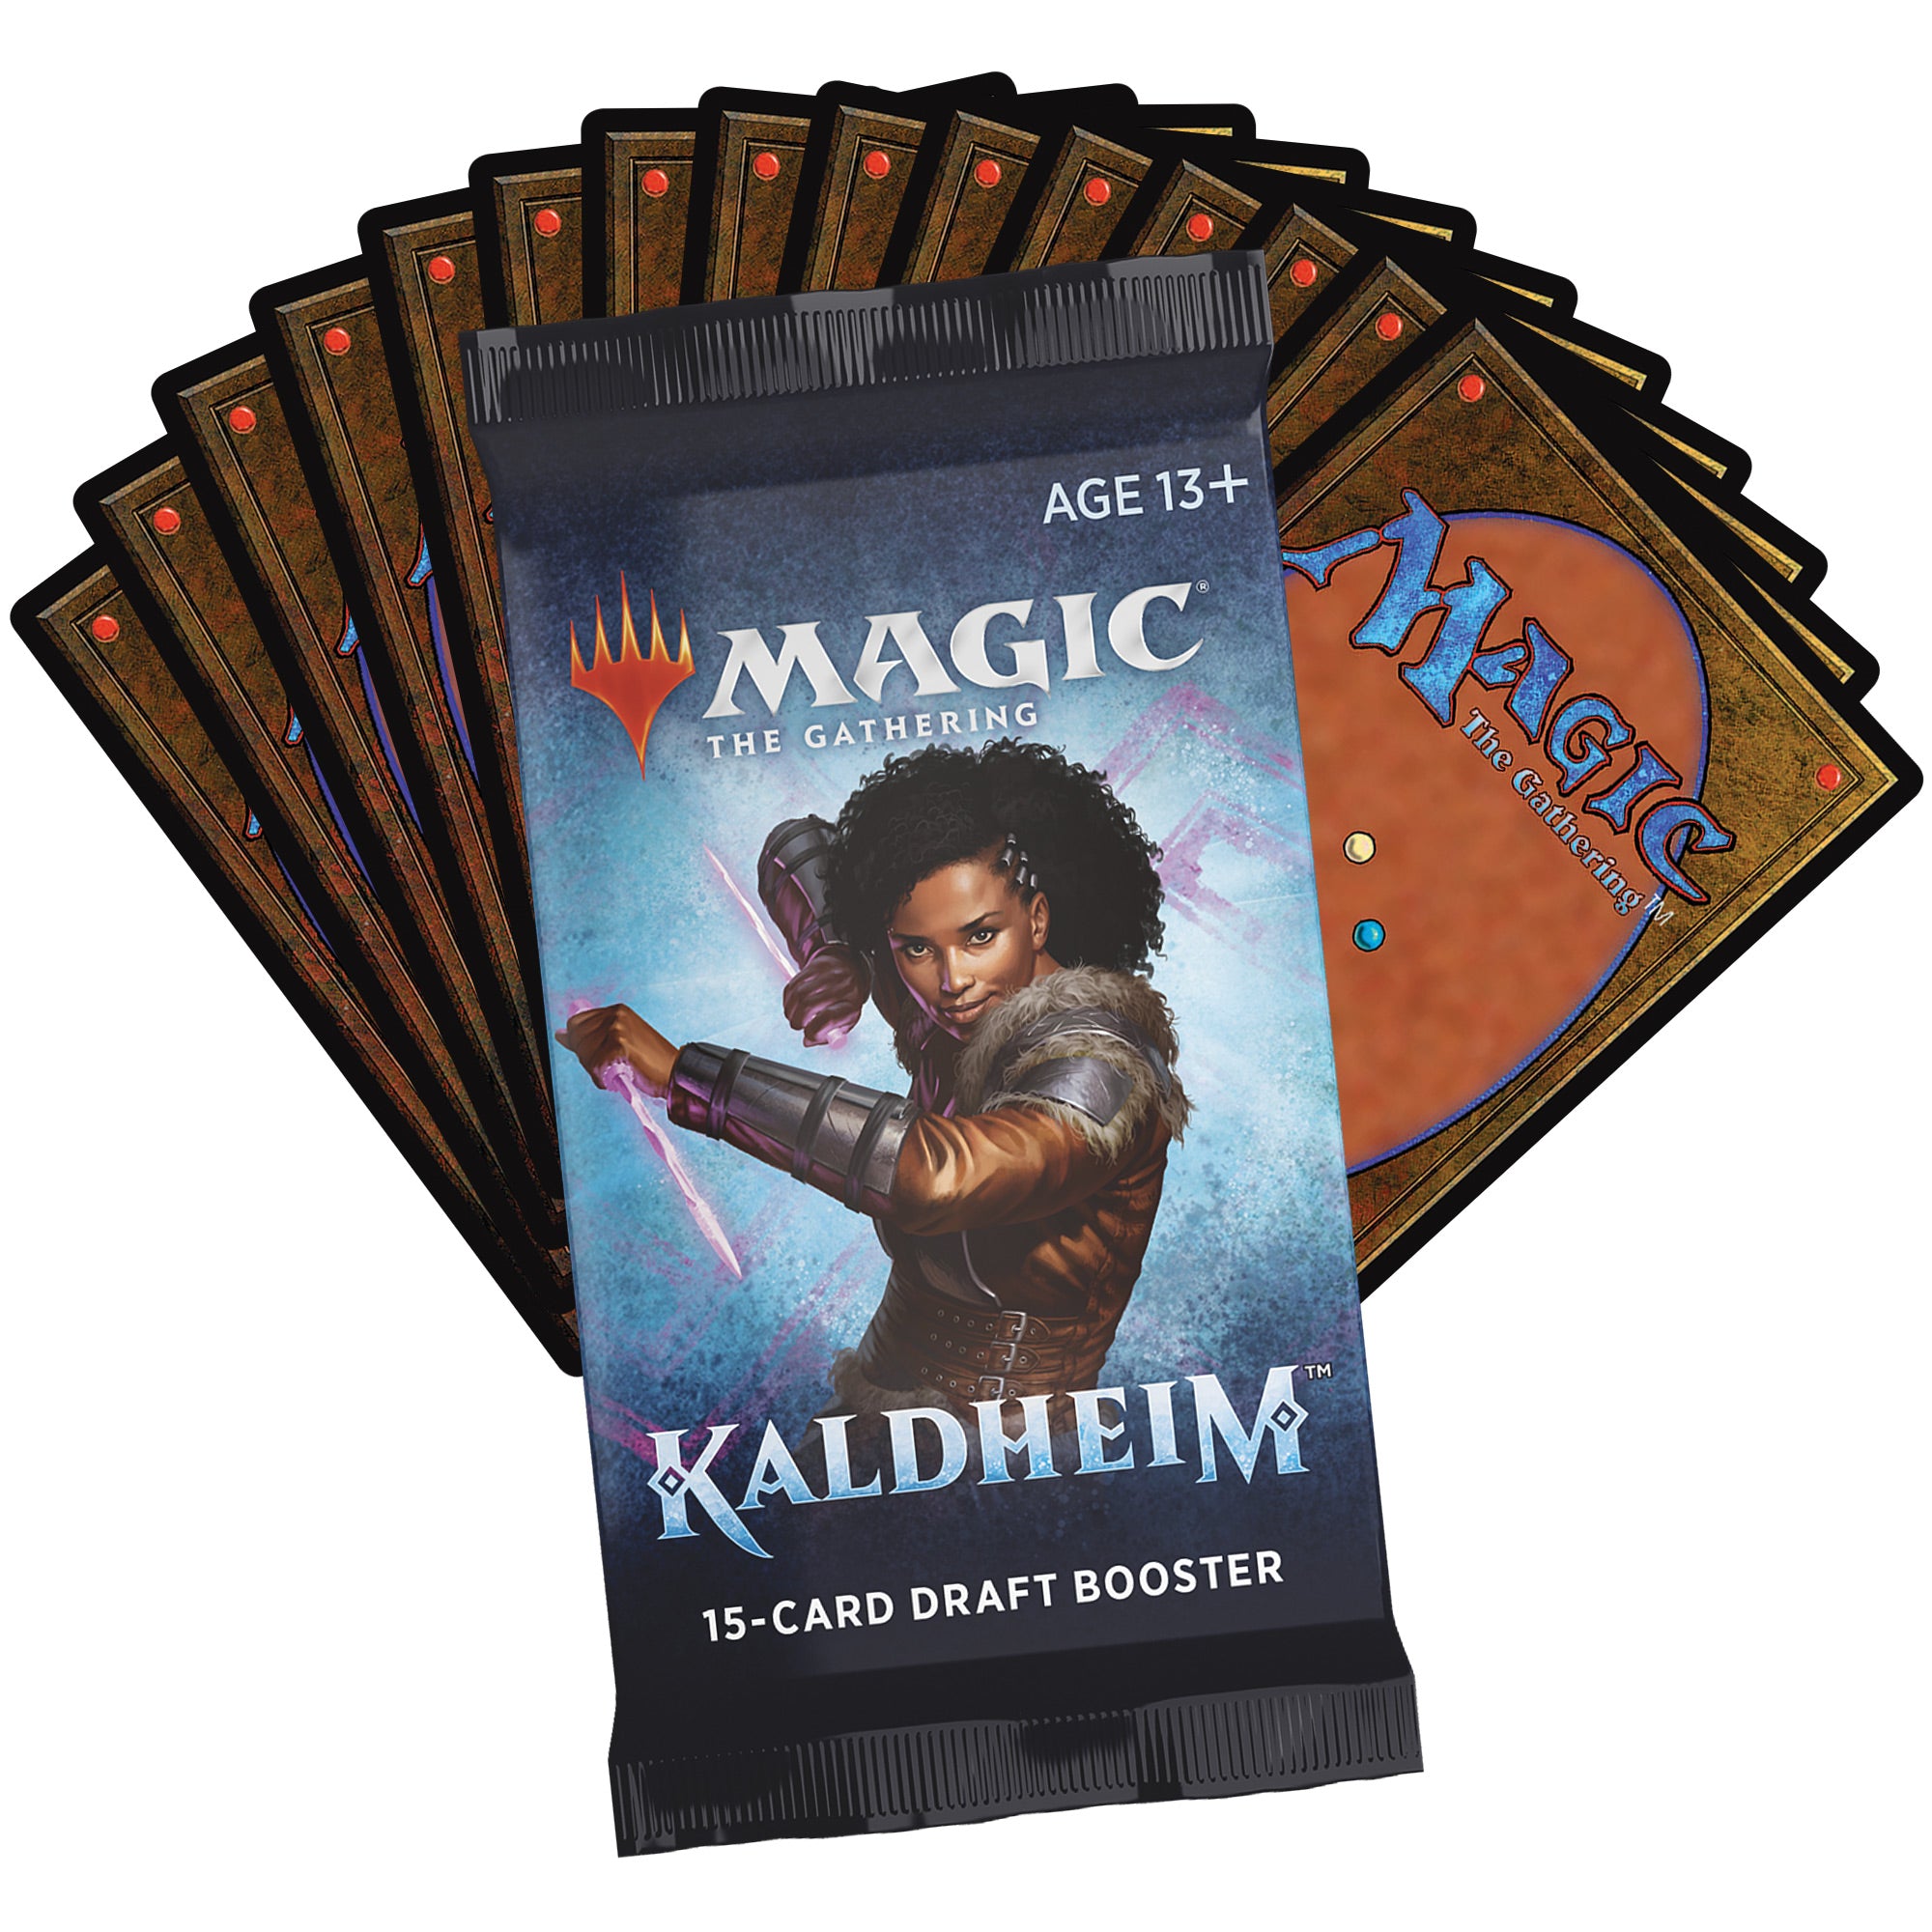 Kaldheim Draft Booster Pack | Gate City Games LLC